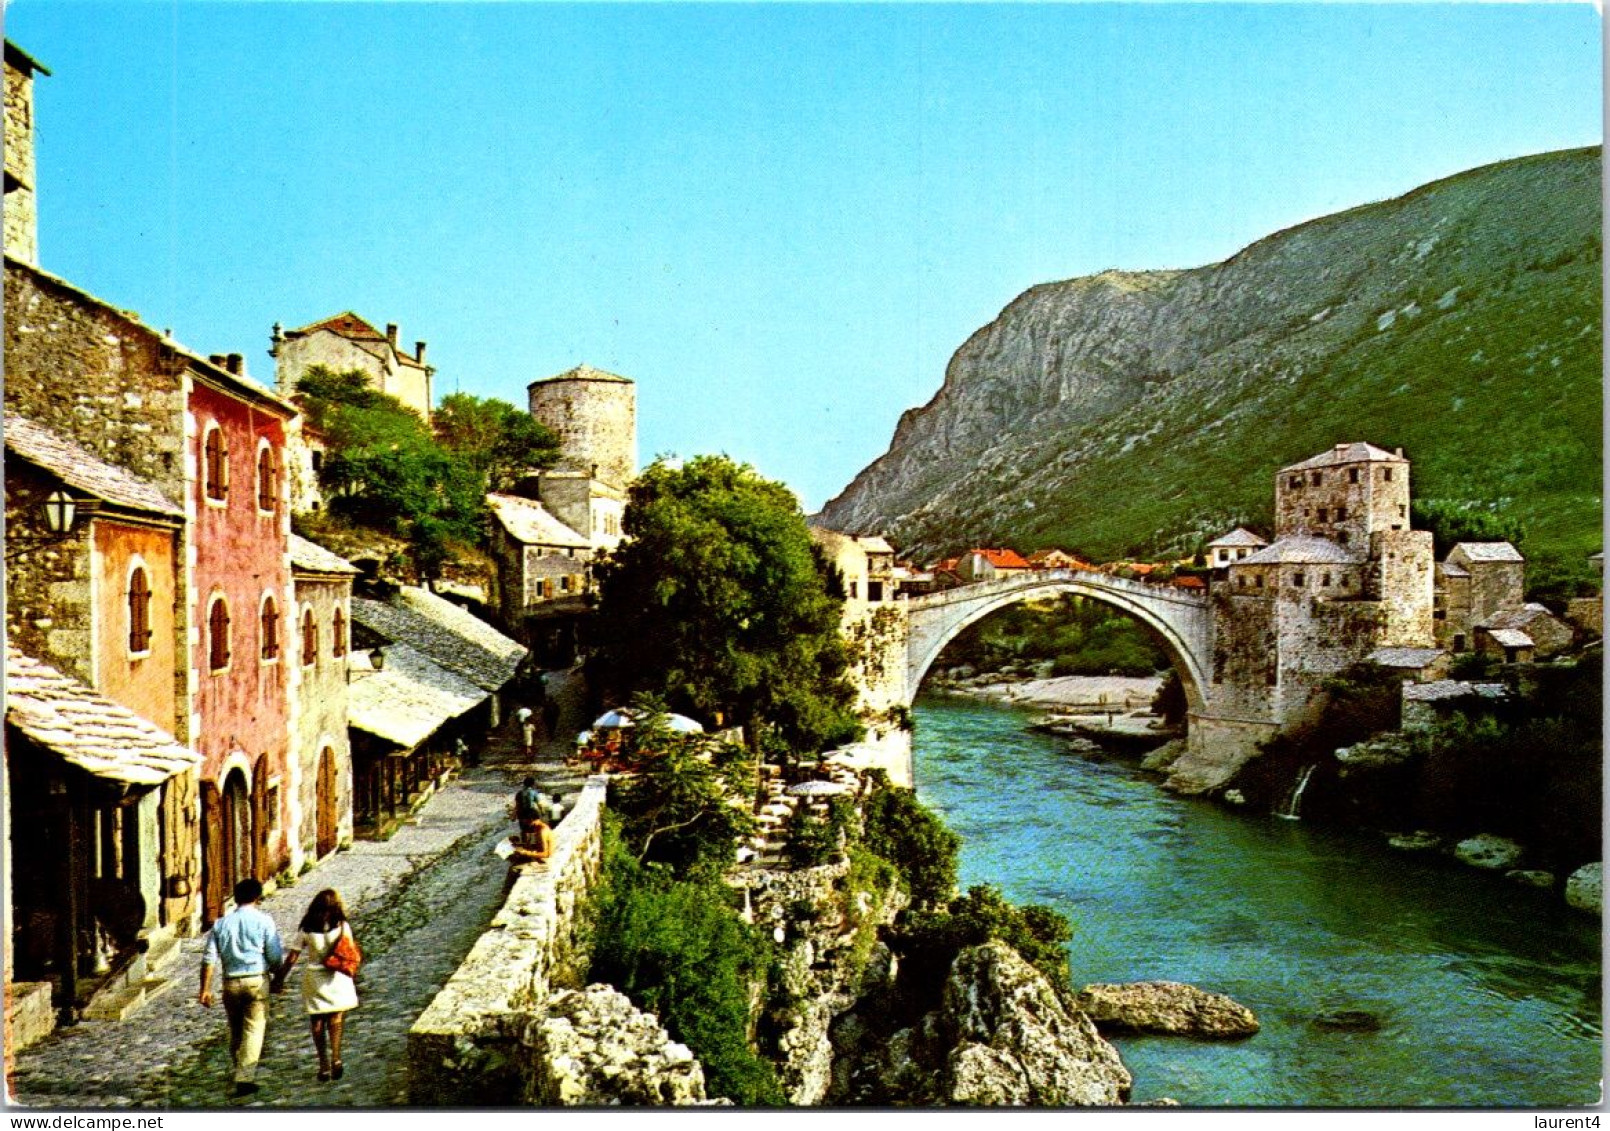 14-4-2024 (2 Z 5) Bosnia Herzegovina - Mostar (2 Postcards) UNESCO Birdge - Bosnien-Herzegowina